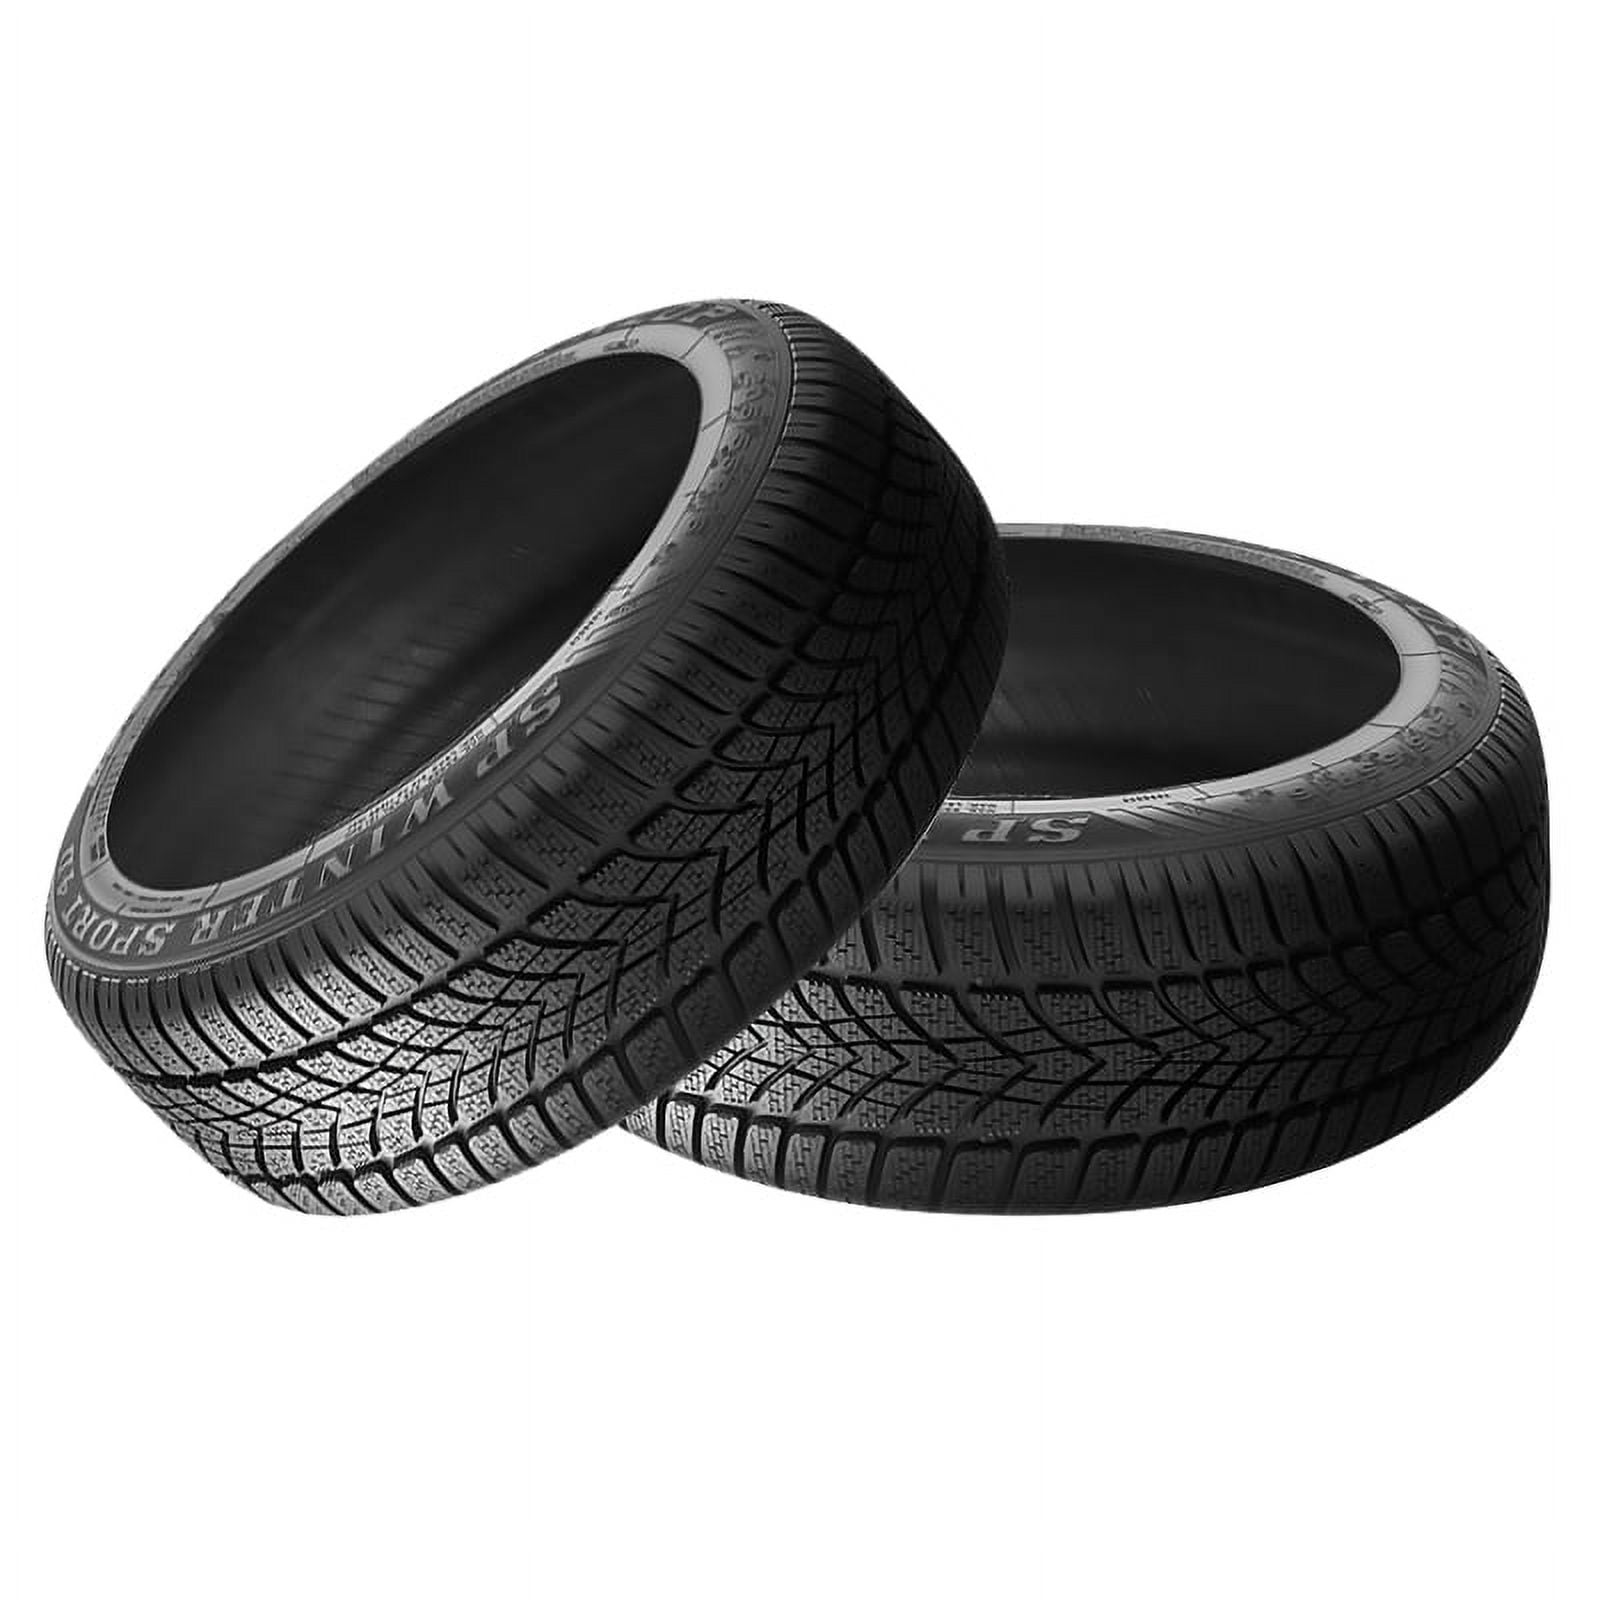 Dunlop sp winter Polestar sport Fits: 1 bsw Polestar 4d tire winter P275/30R21 98W 2020-21 Base